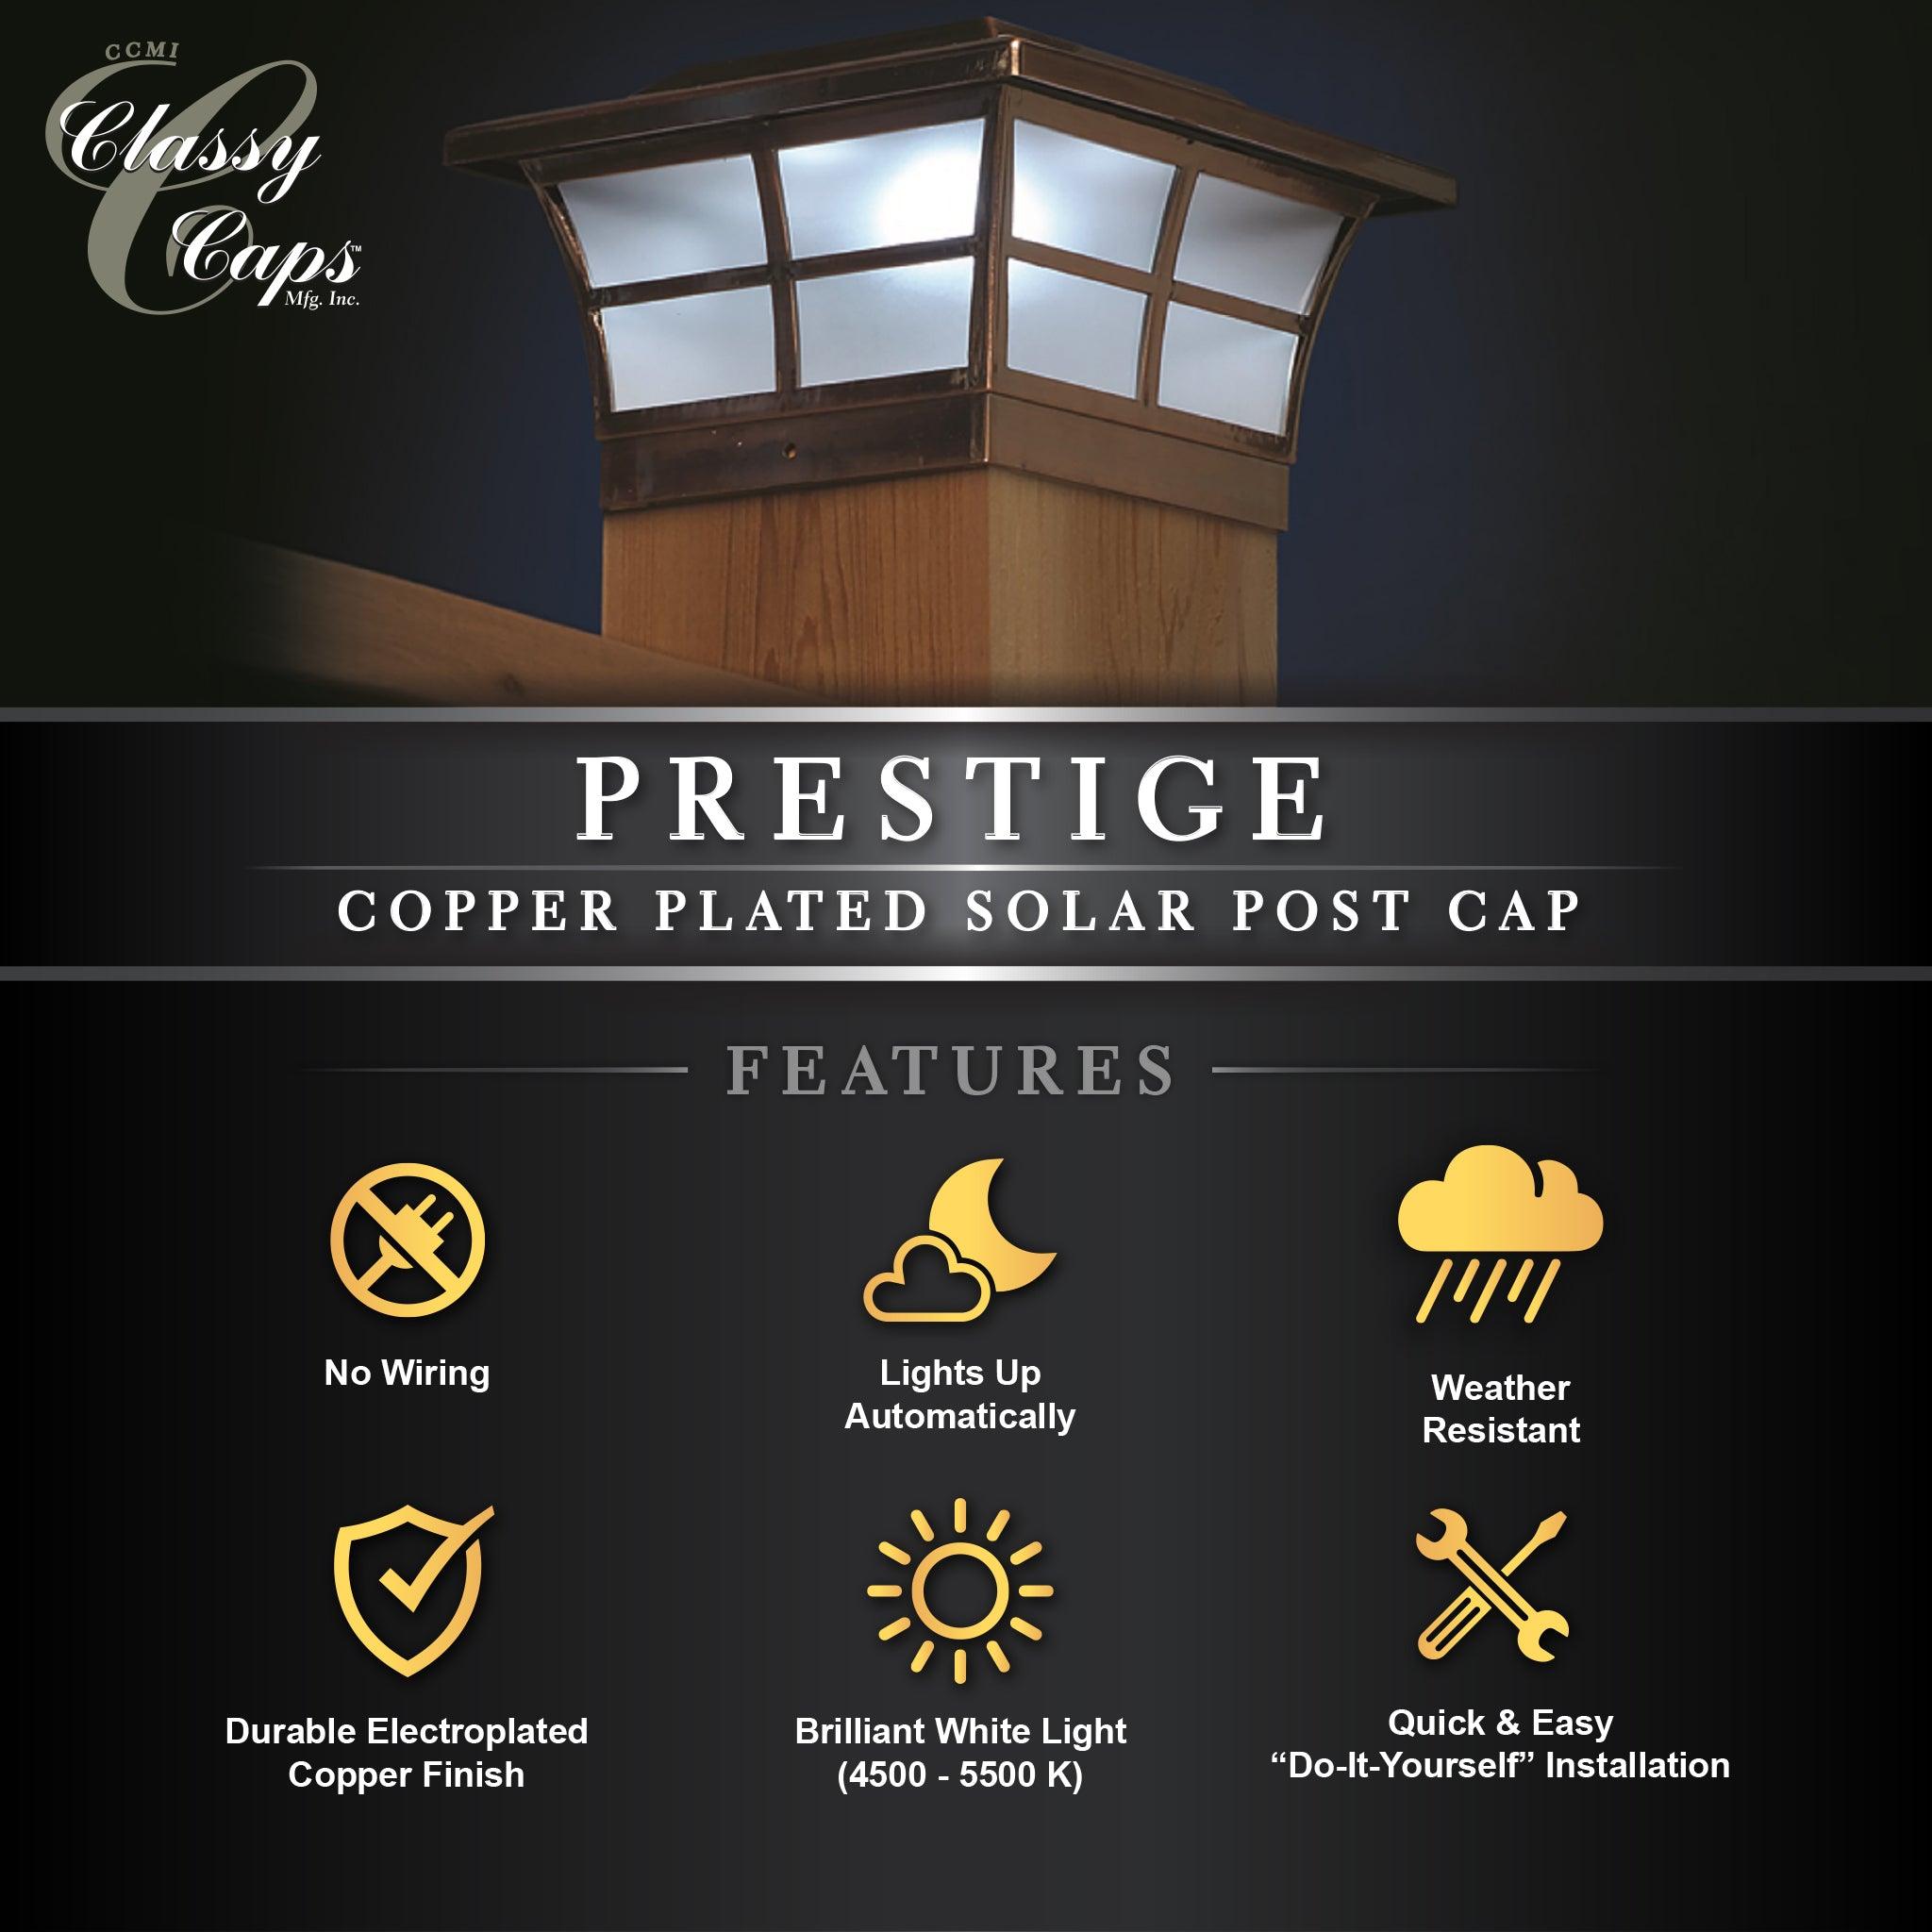 Prestige Solar Post Cap - Copper Electroplated SLO86 - Classy Caps Mfg. Inc.